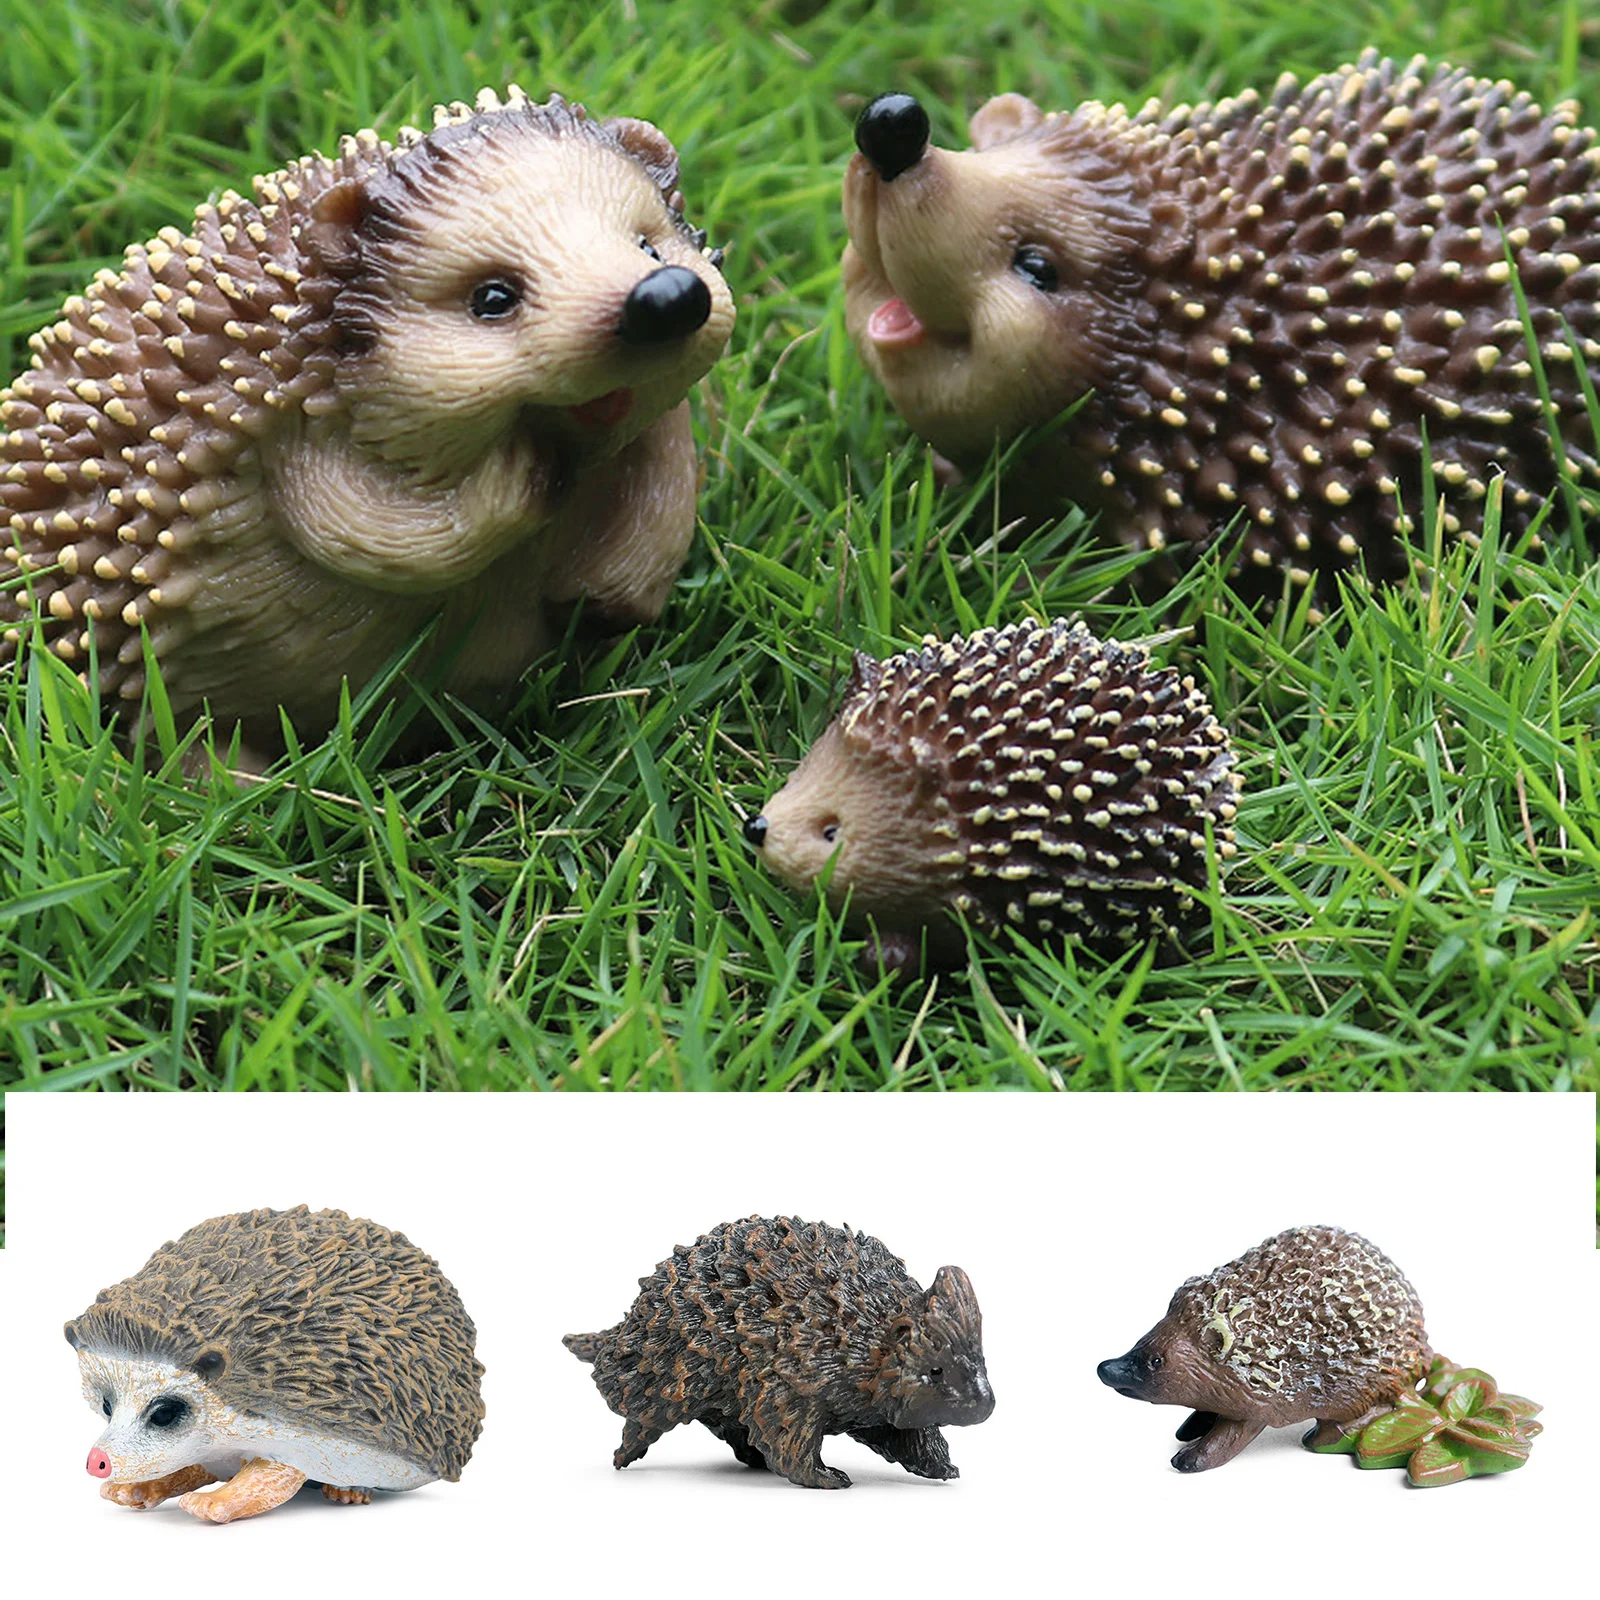 

Hedgehogs Garden Animal Outdoor Ornaments Decor Statue Decorative Animals Figurines for Home Patio Lawn Hogard